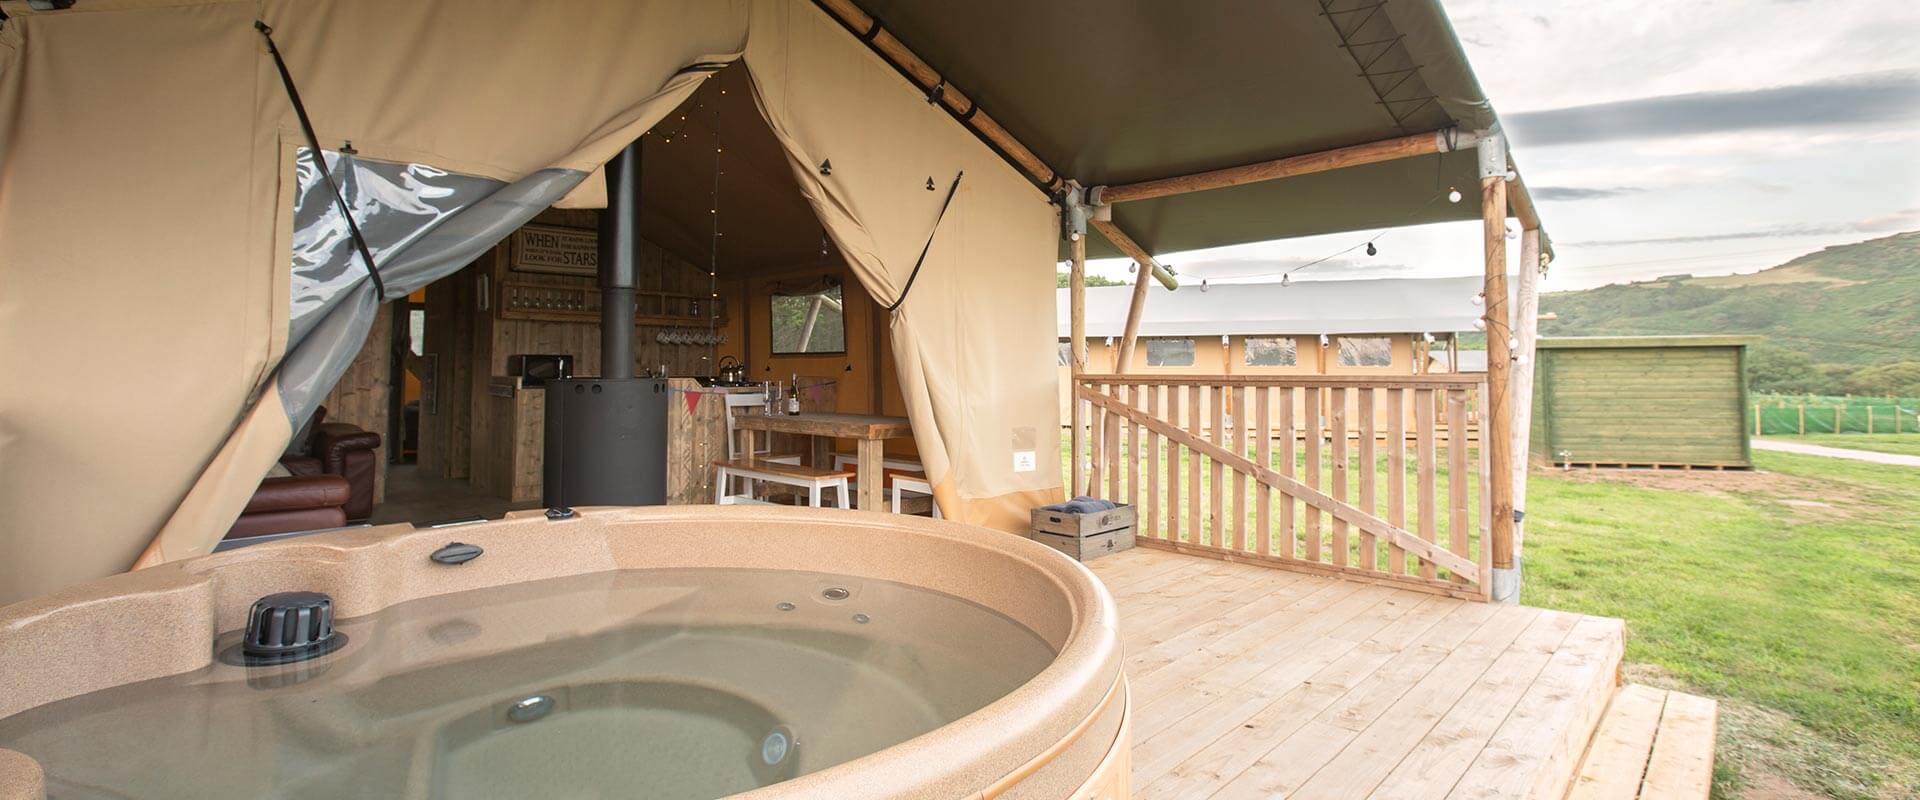 Safari Tent Hot Tub